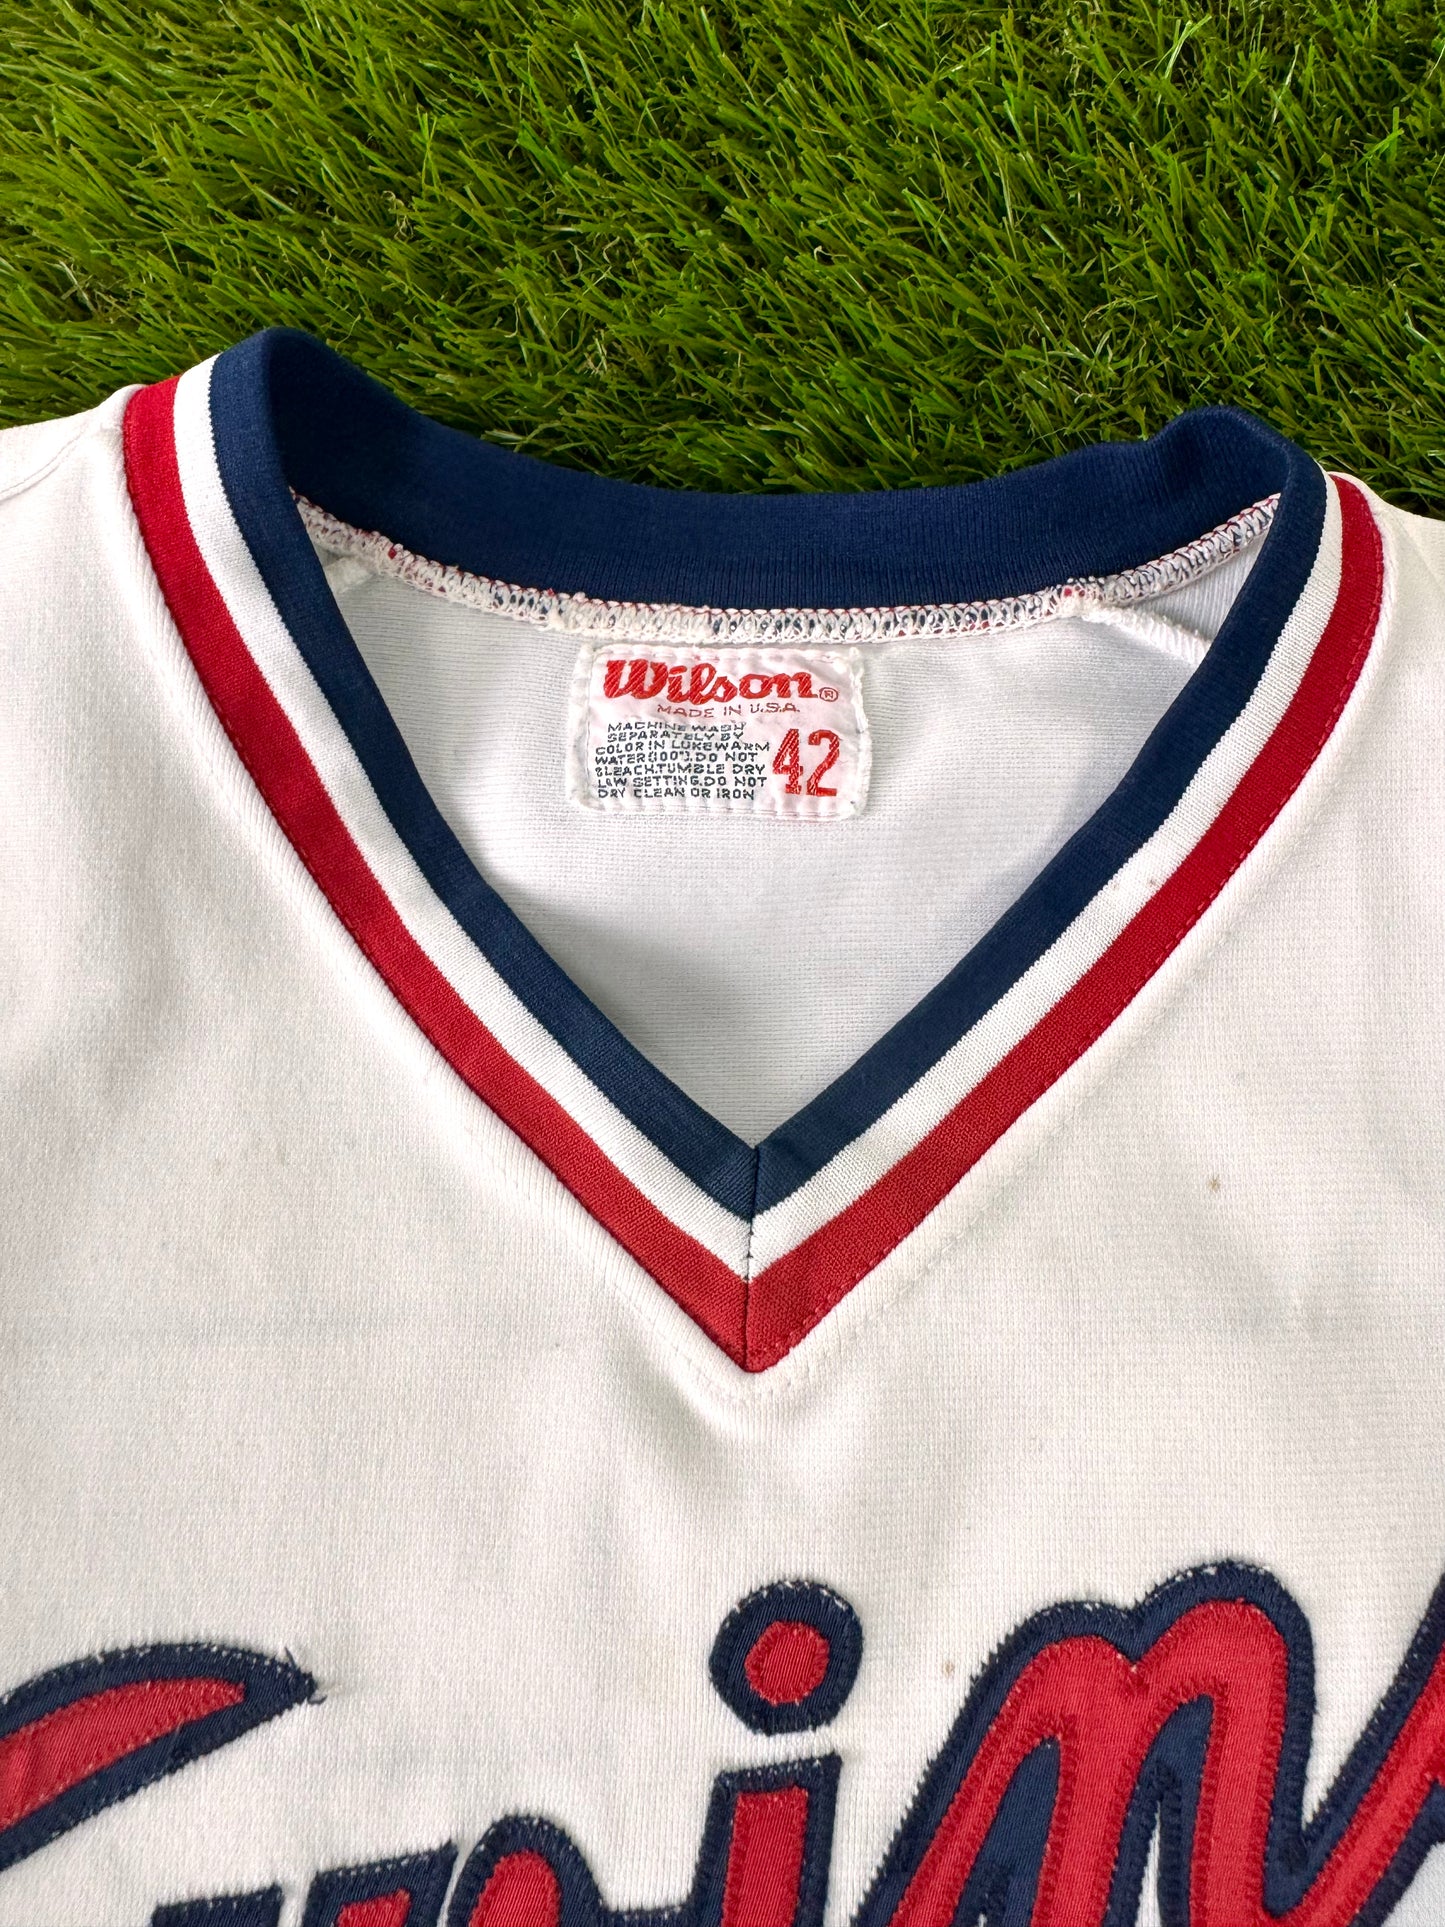 Minnesota Twins Bobby Castillo 1983 Game Worn MLB Baseball Jersey, Pants, and Stirrups (42/Medium)